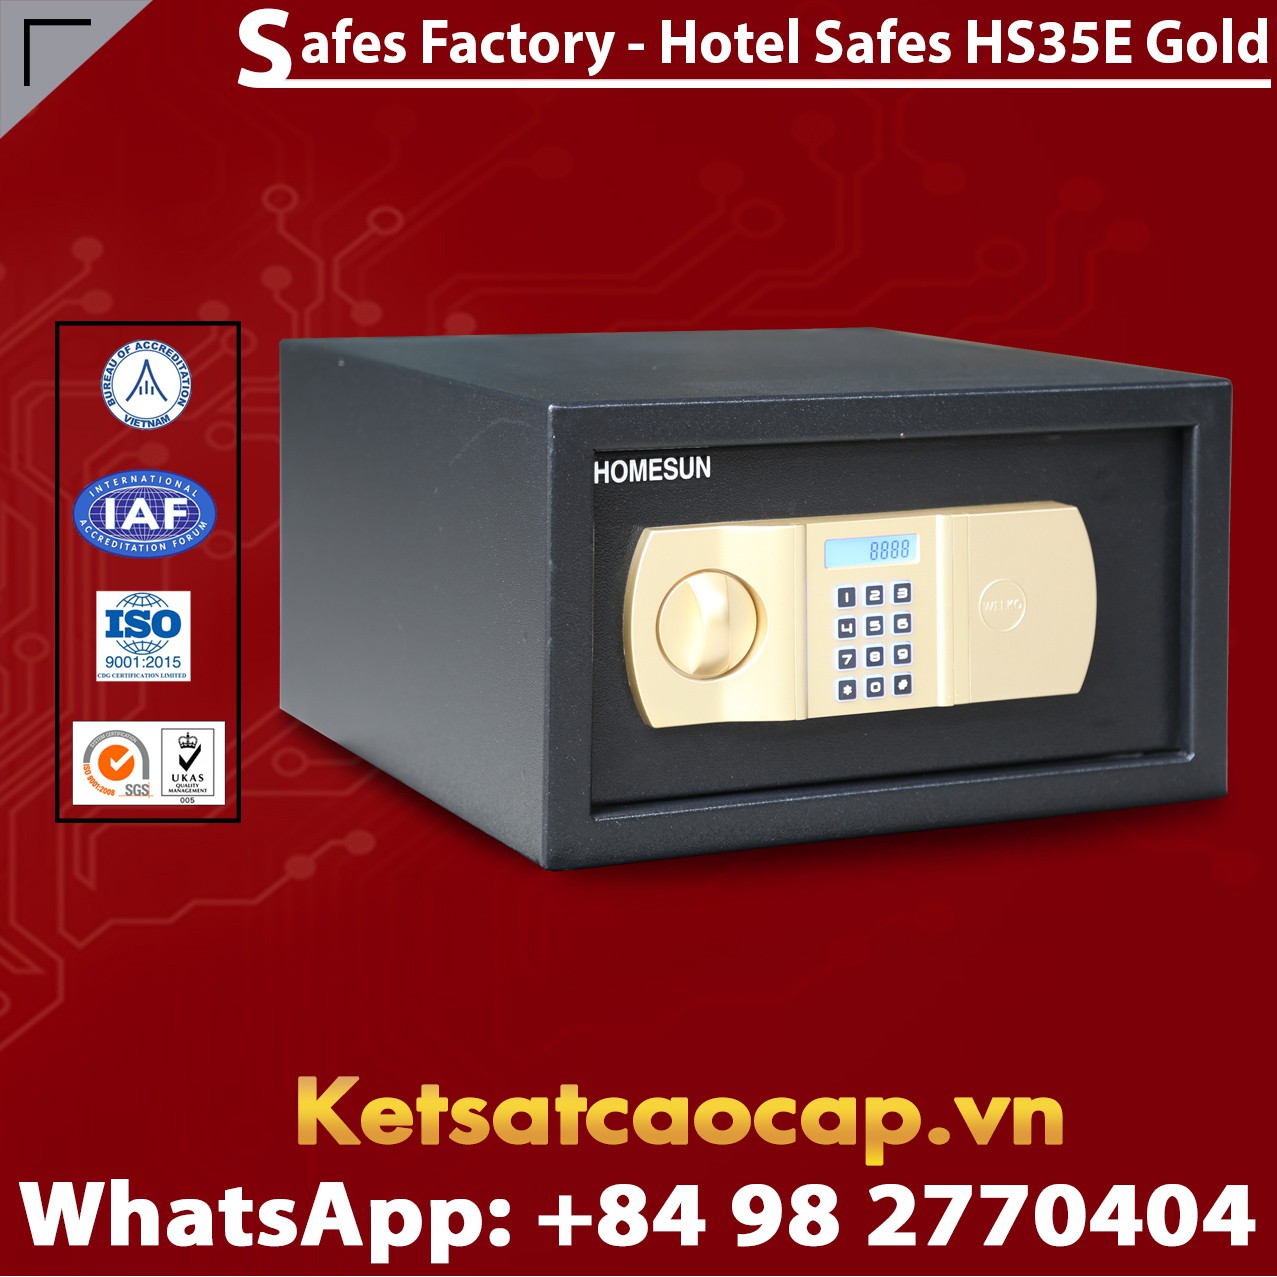 Best Sellers In Hotel Safes HOMESUN HS35 E Gold